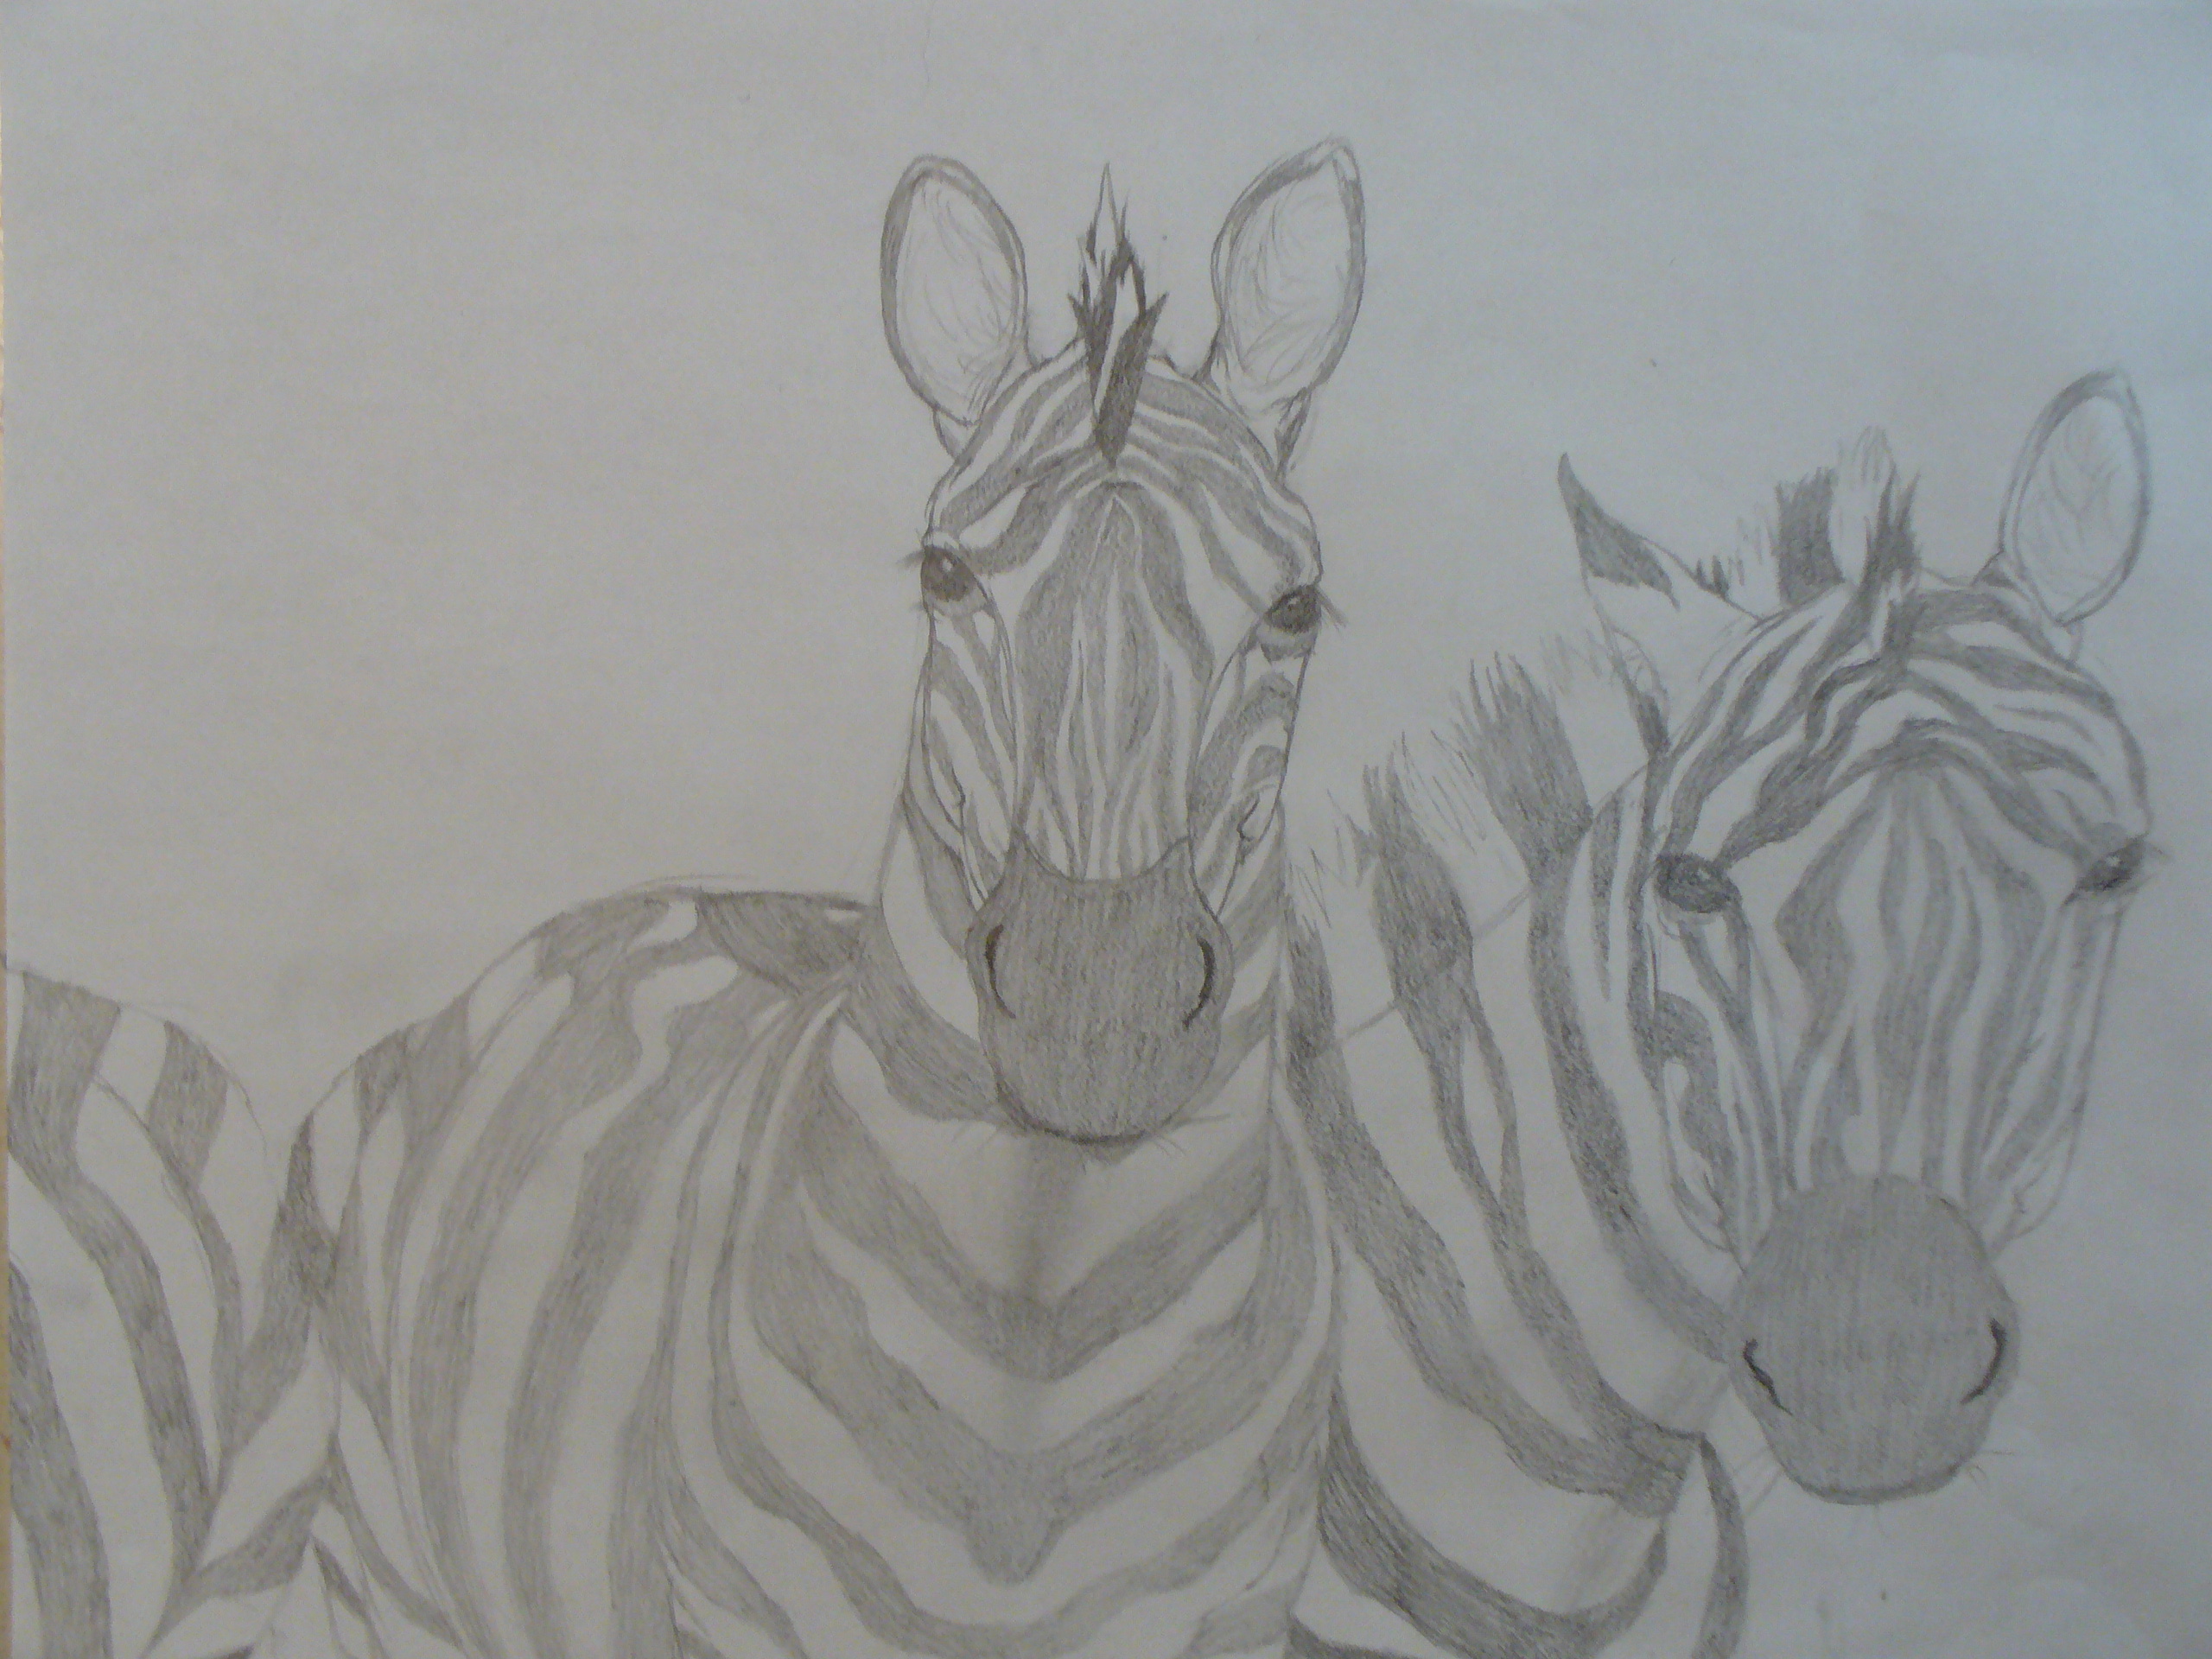 Zebras by Soccermustang